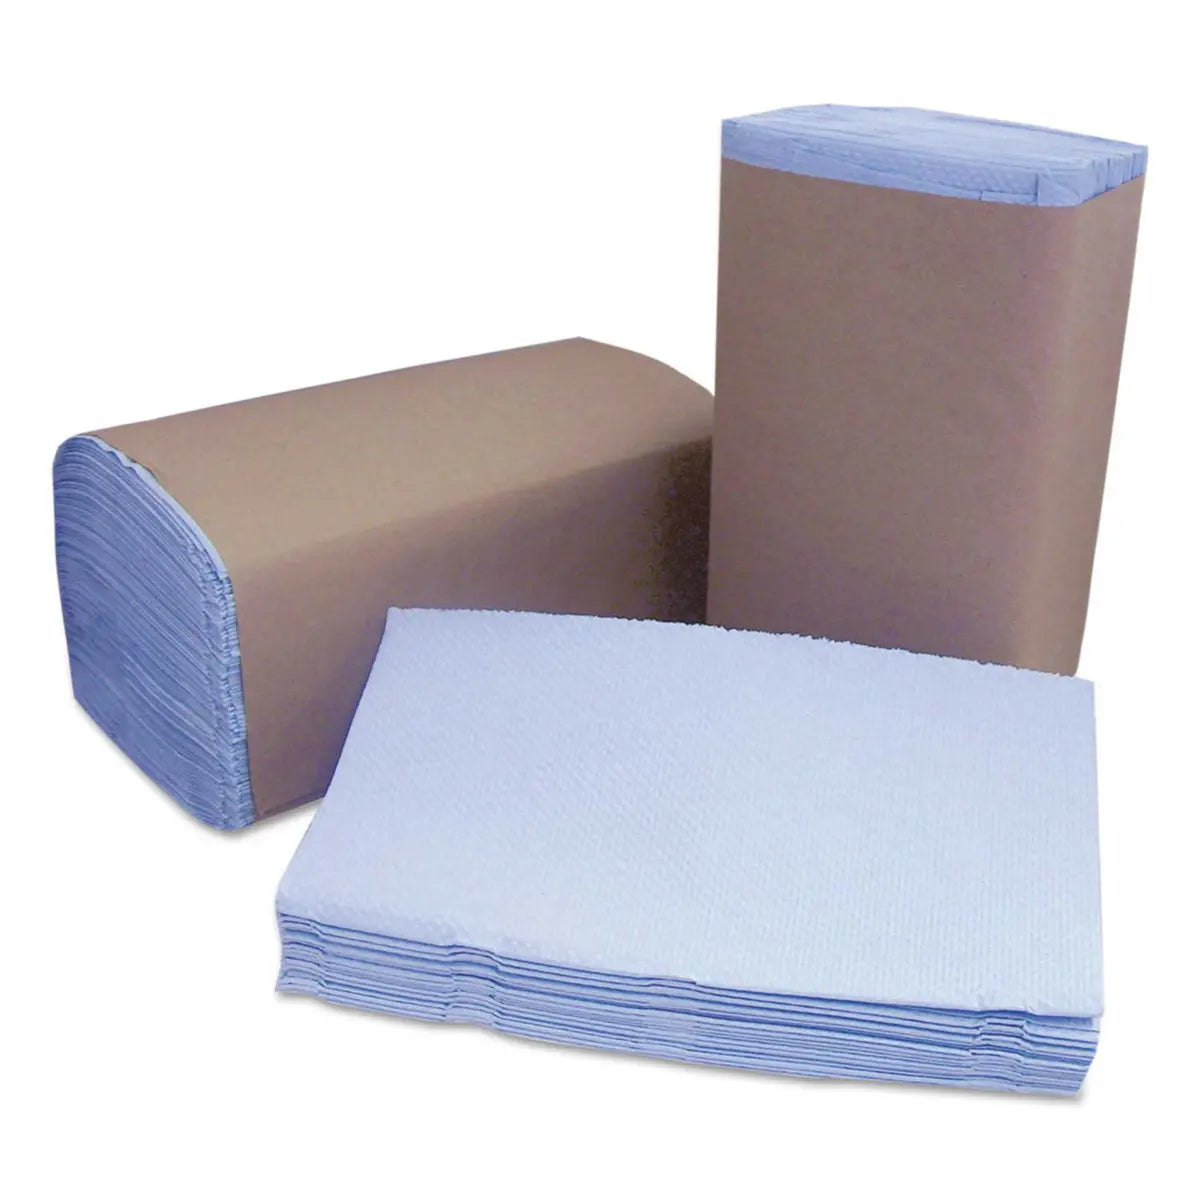 H110 SINGLEFOLD WHITE PAPER TOWELS (4000/CASE)